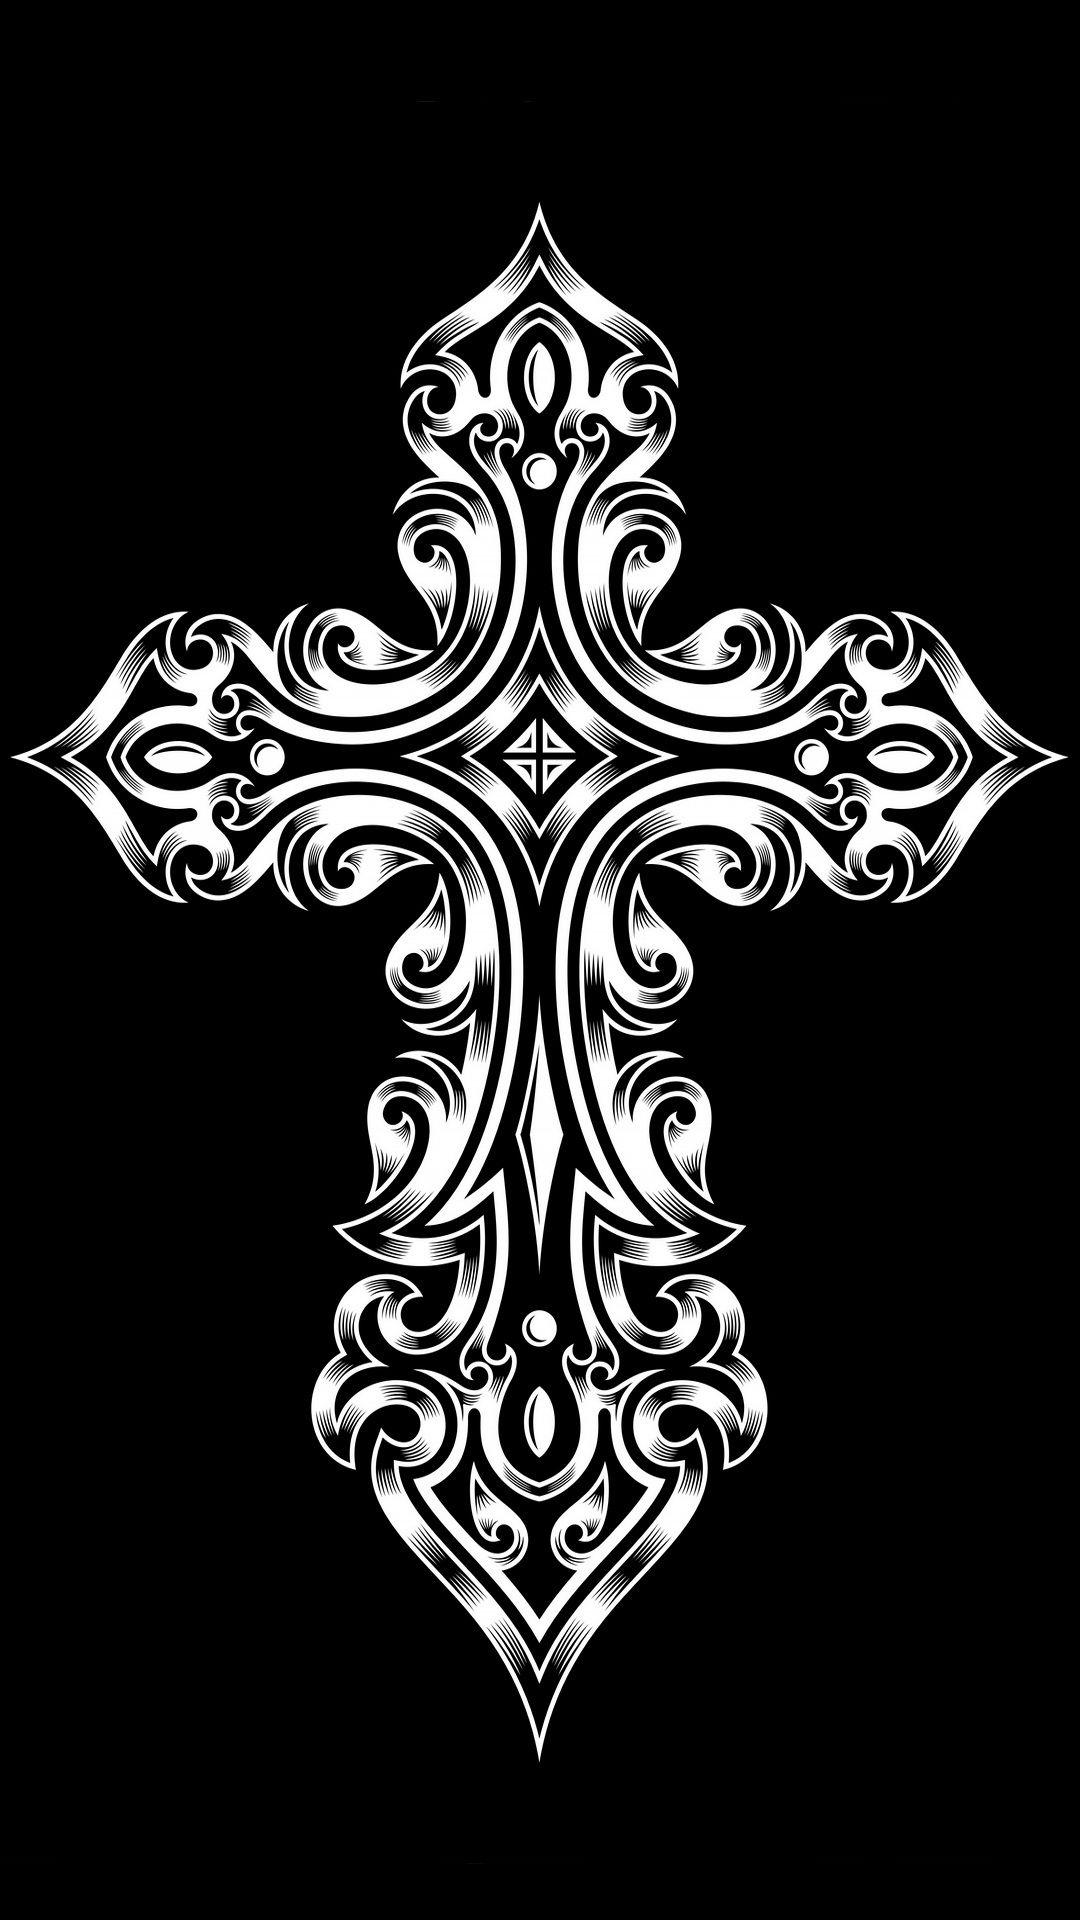 A Beautiful Cross wallpaper by Ninoscha  Download on ZEDGE  8a6a